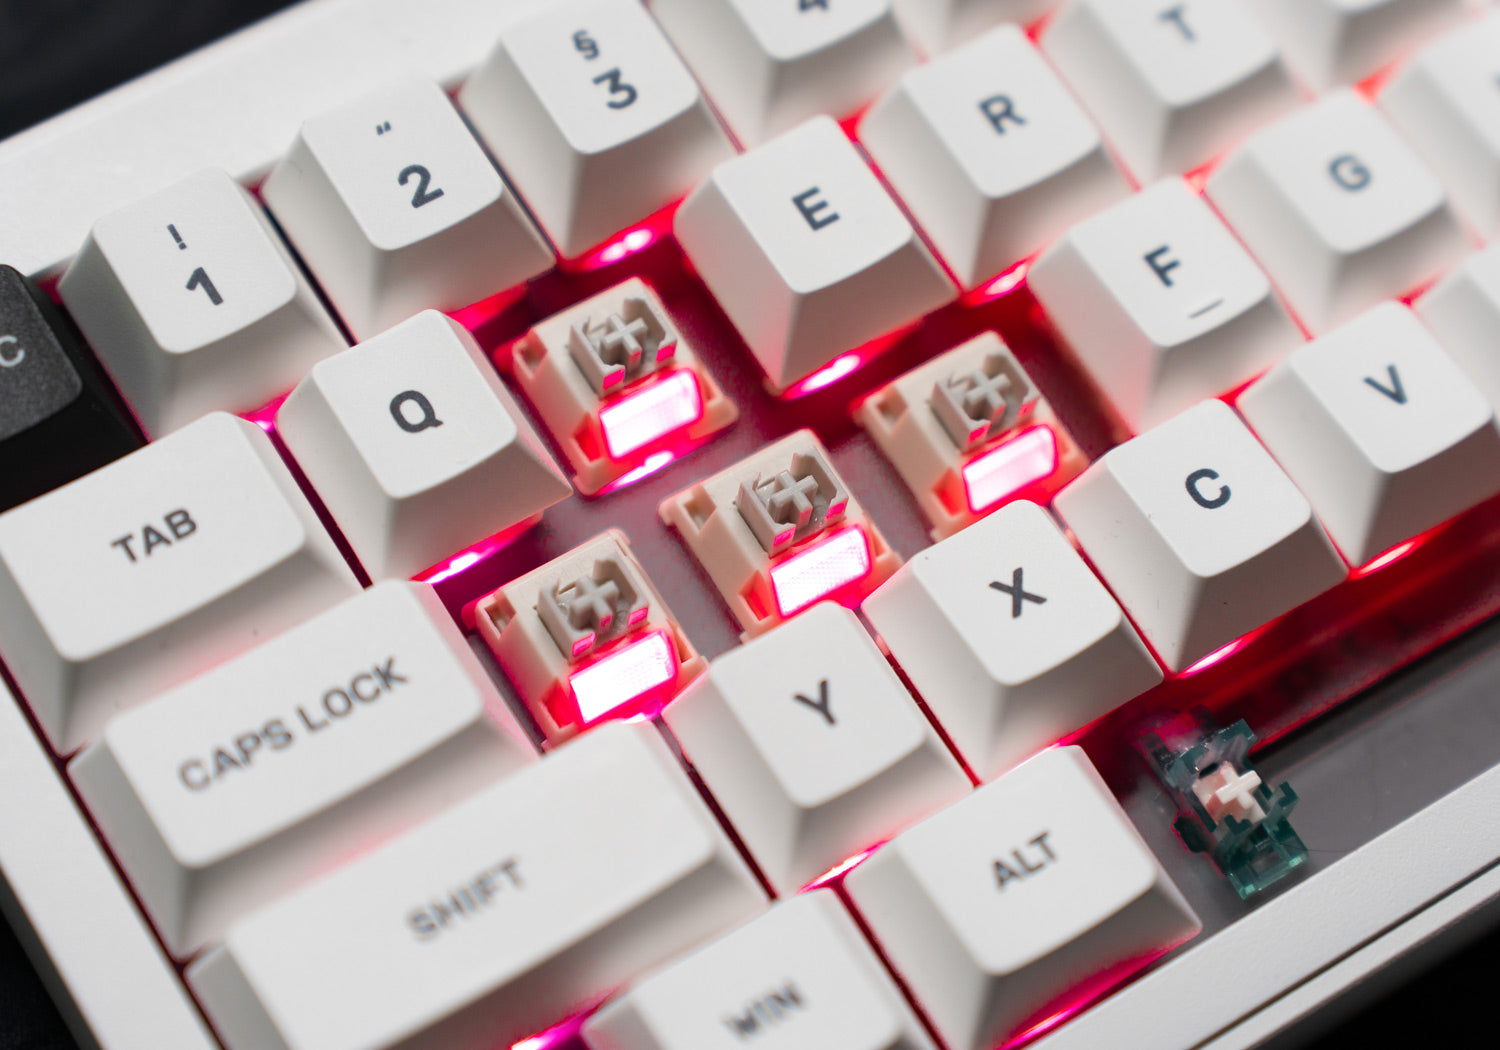 Ikigai keyboard custom quark switches rgb effect view desktop